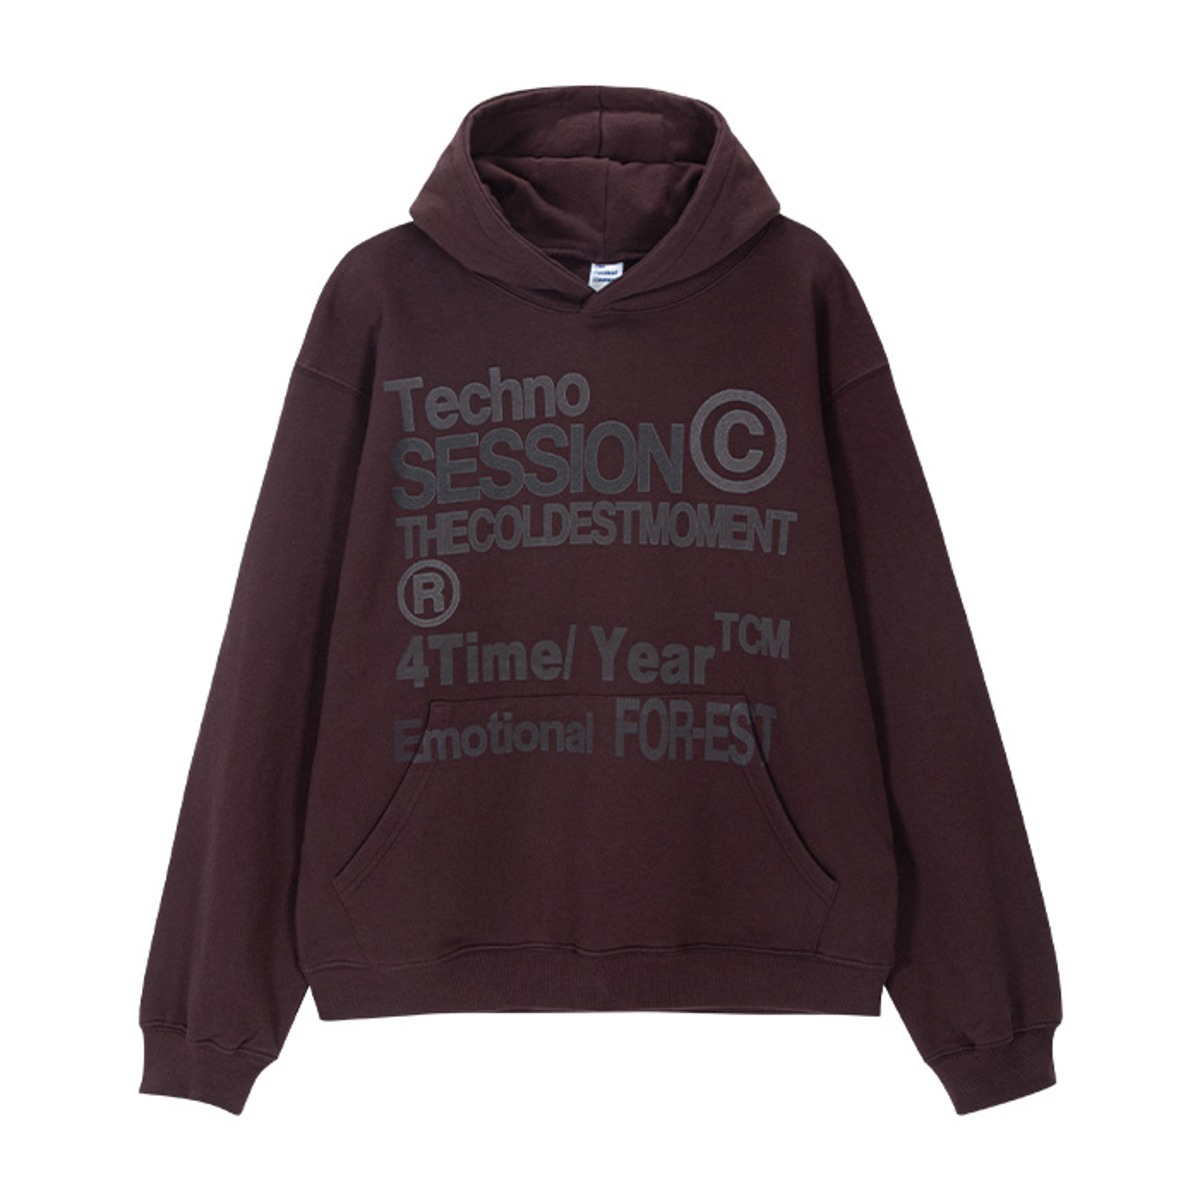 TCM techno hoodie (dark wine)